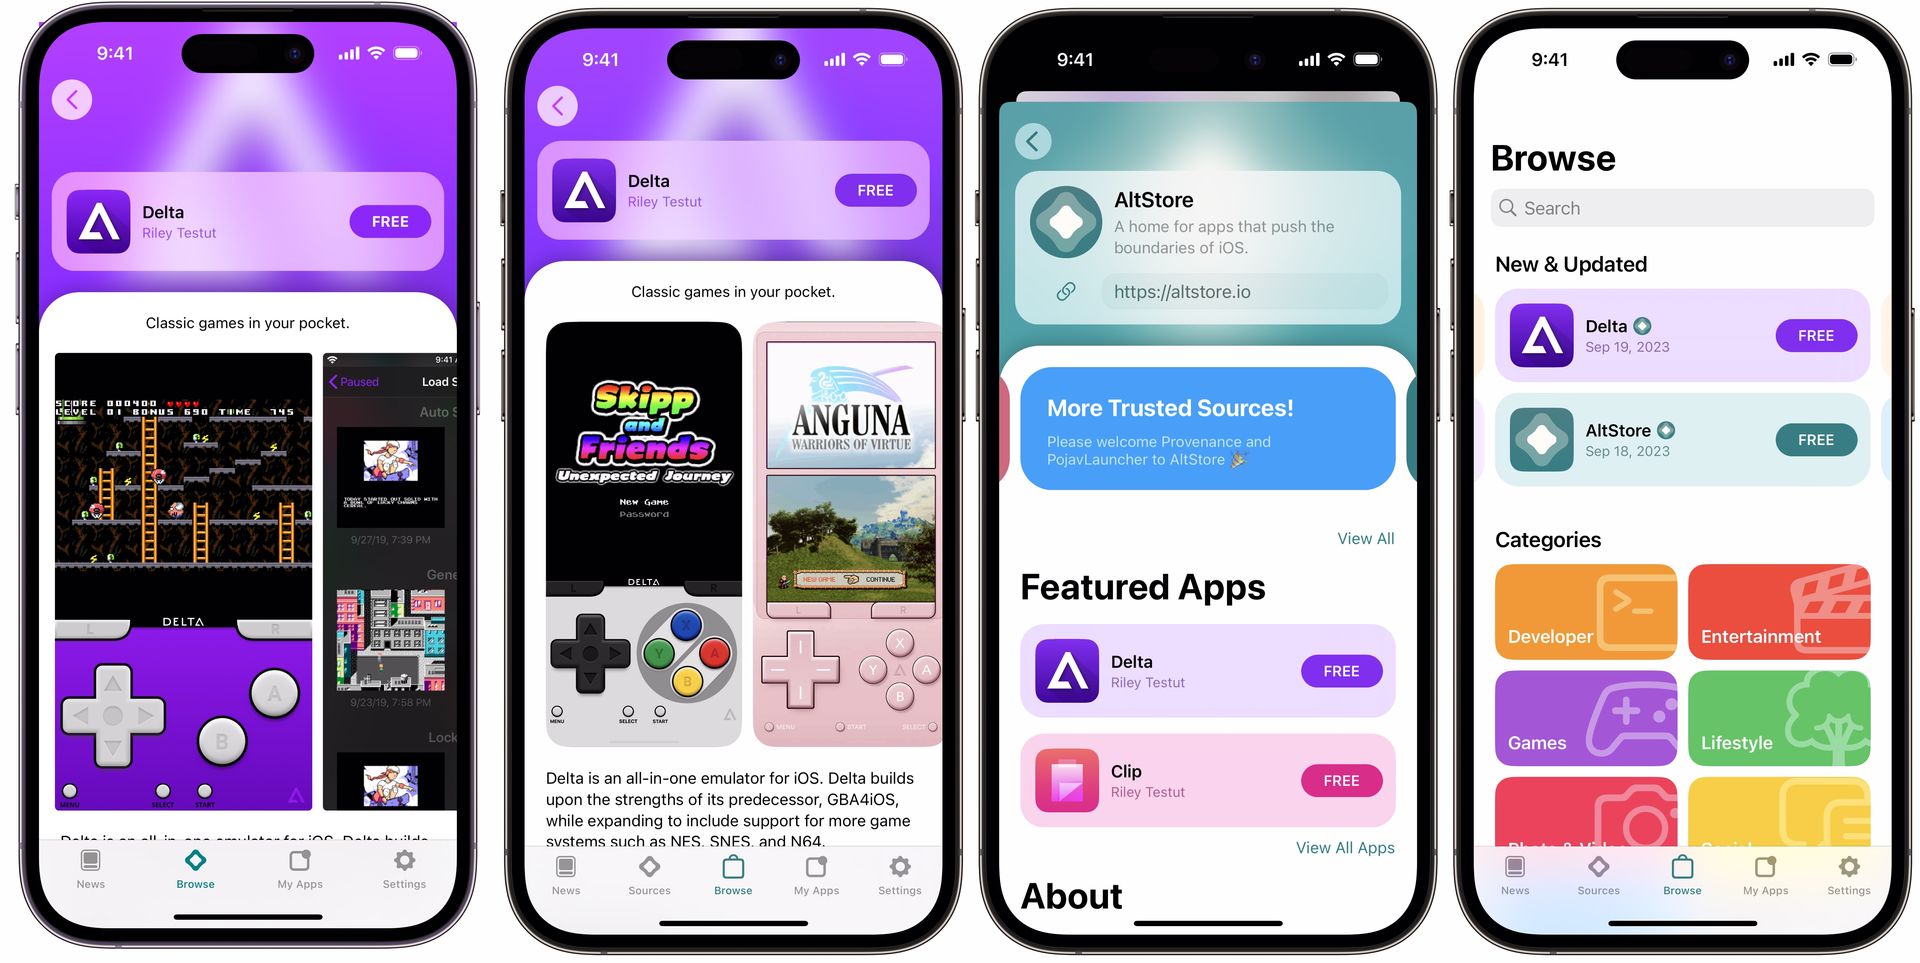 AltStore PAL: iPhone App Store'una alternatifler gelmeye başladı